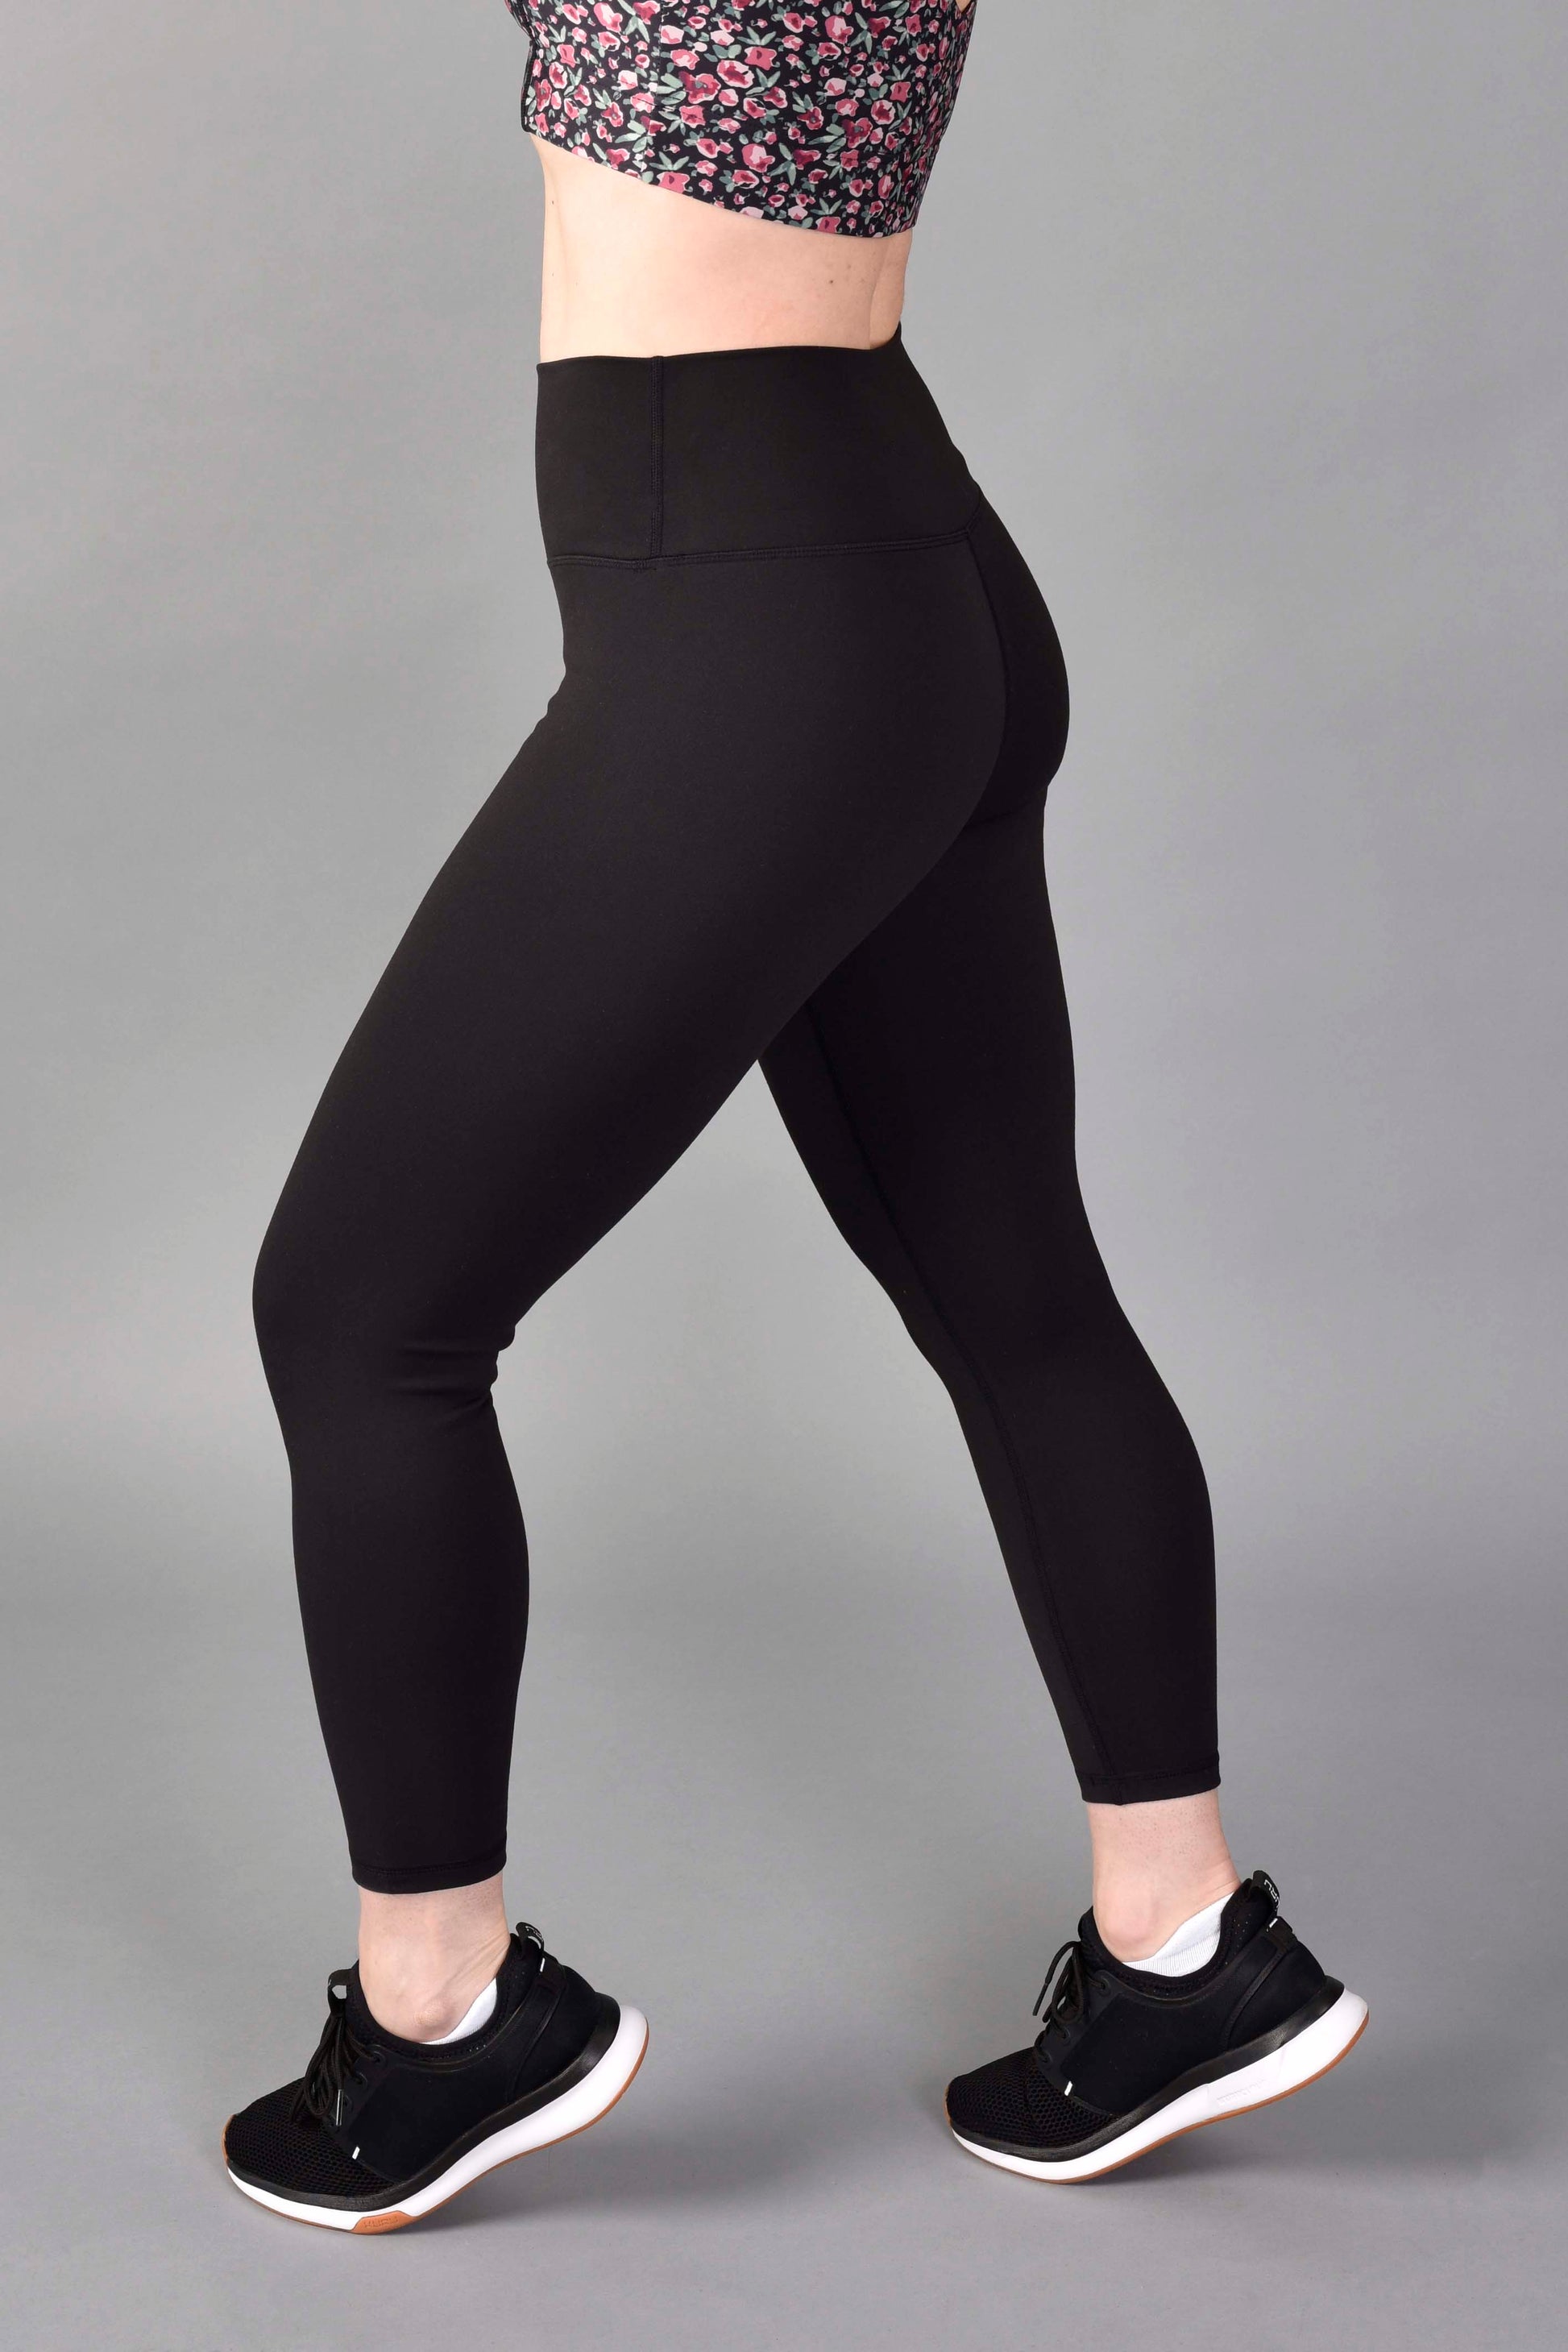 Black cropped lululemon leggings. A staple piece in